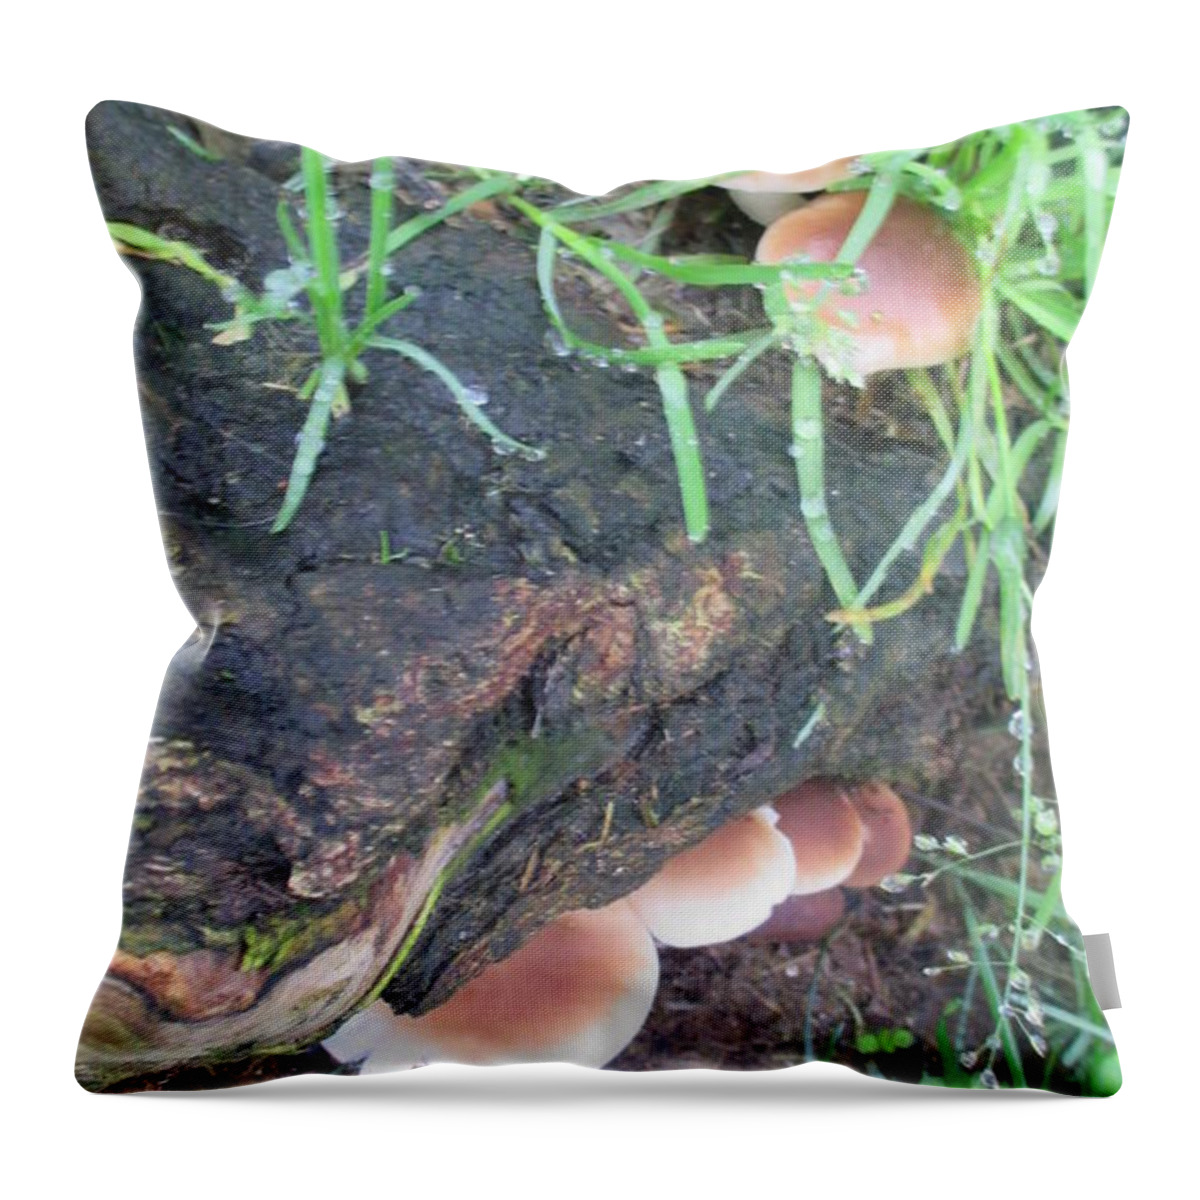 Mushrooms Throw Pillow featuring the photograph Mushrooms under the tree by Anamarija Marinovic